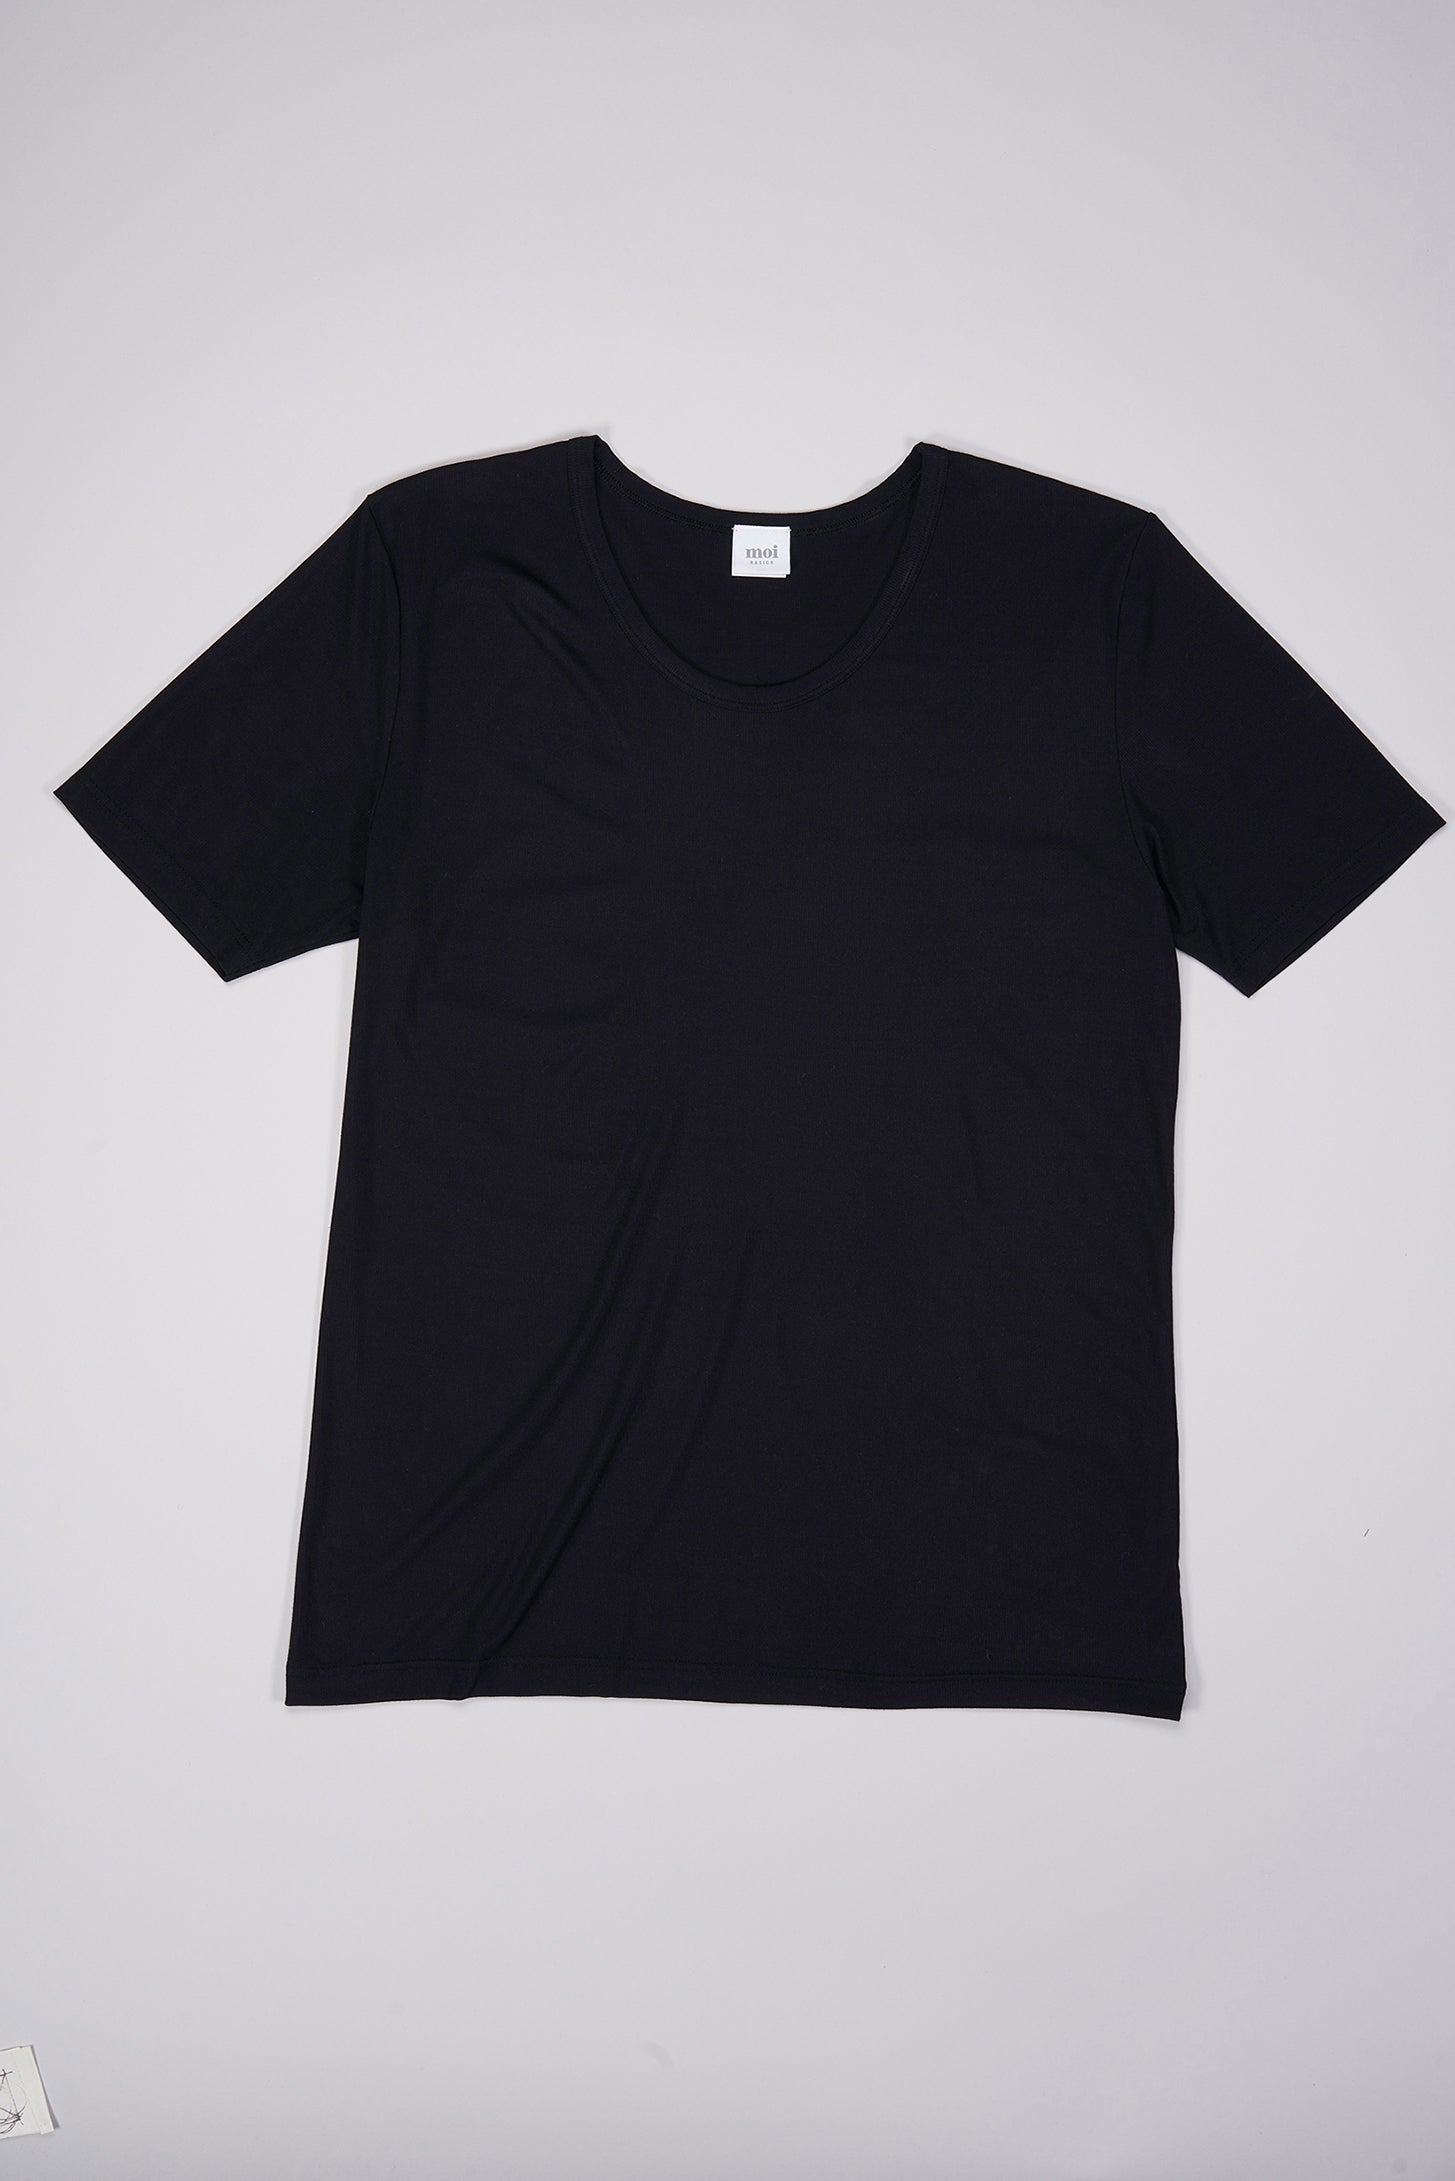 T-shirt noir en MicroModal naturel de moi-basics